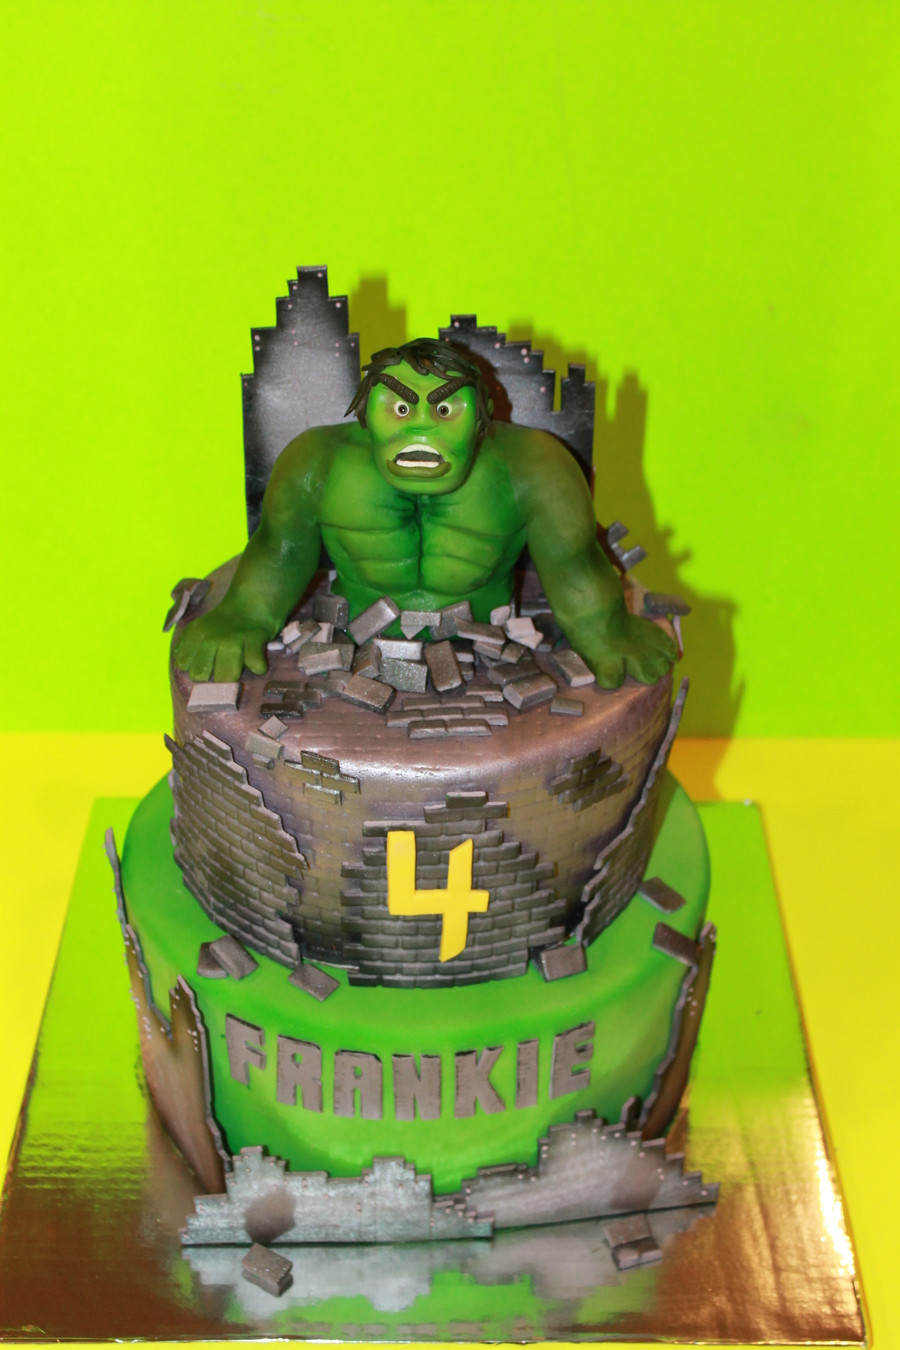 Incredible Hulk Birthday Cake
 Incredible Hulk Cake CakeCentral